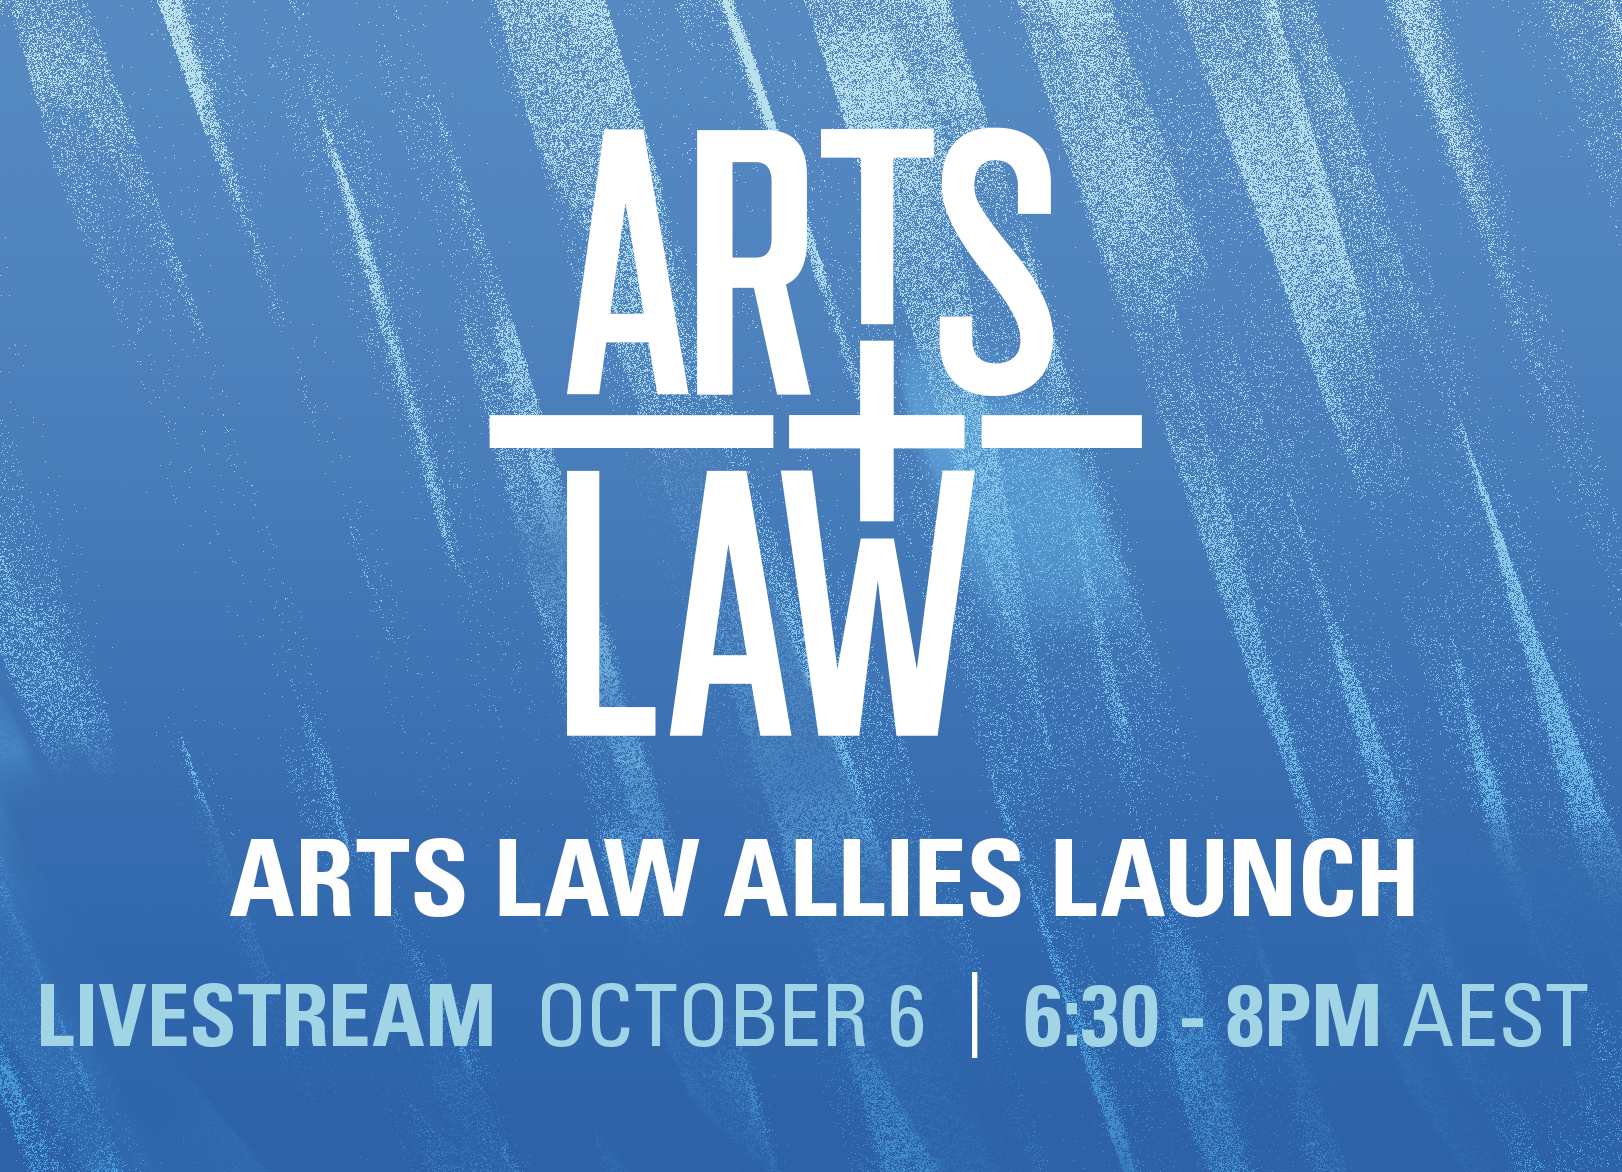 Arts Law Allies Launch Arts Law Centre of Australia